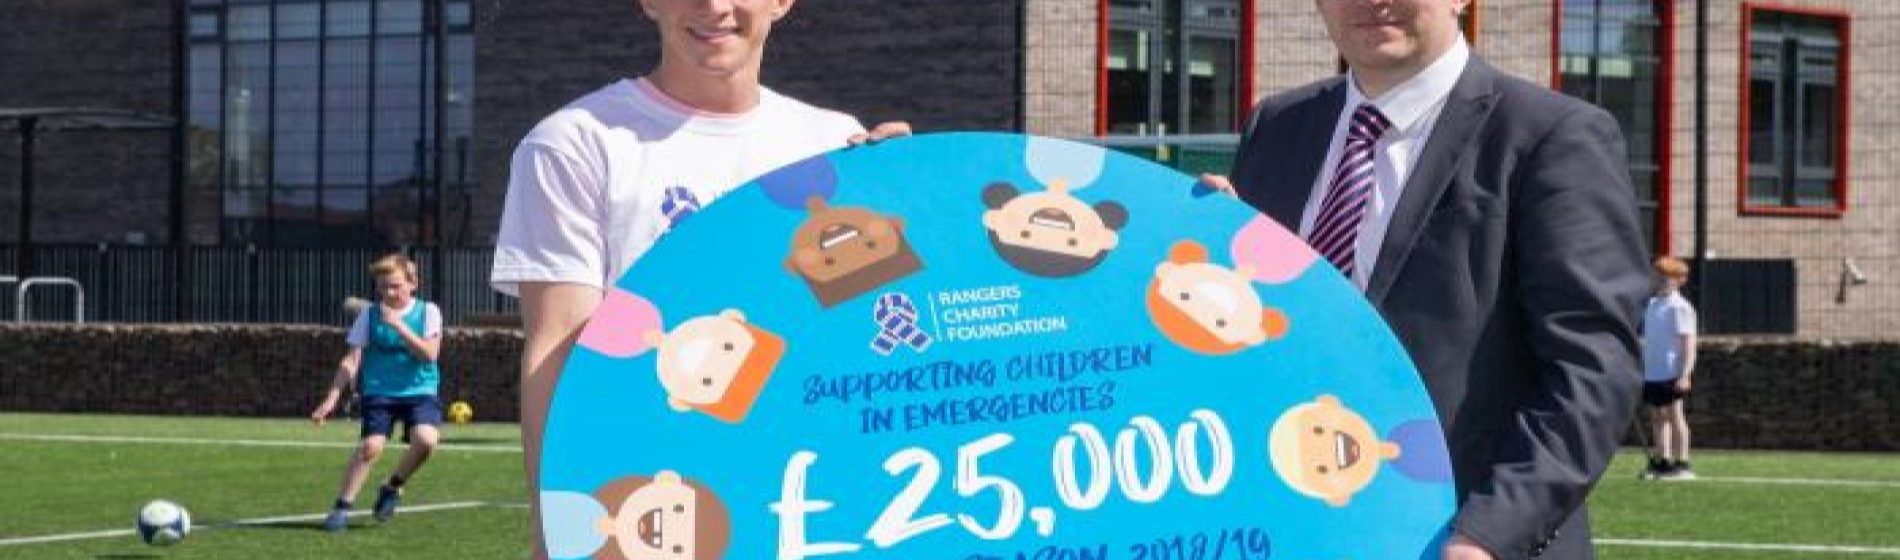 Rangers Charity Foundation Ross McCrorie UNICEF fundraising handover